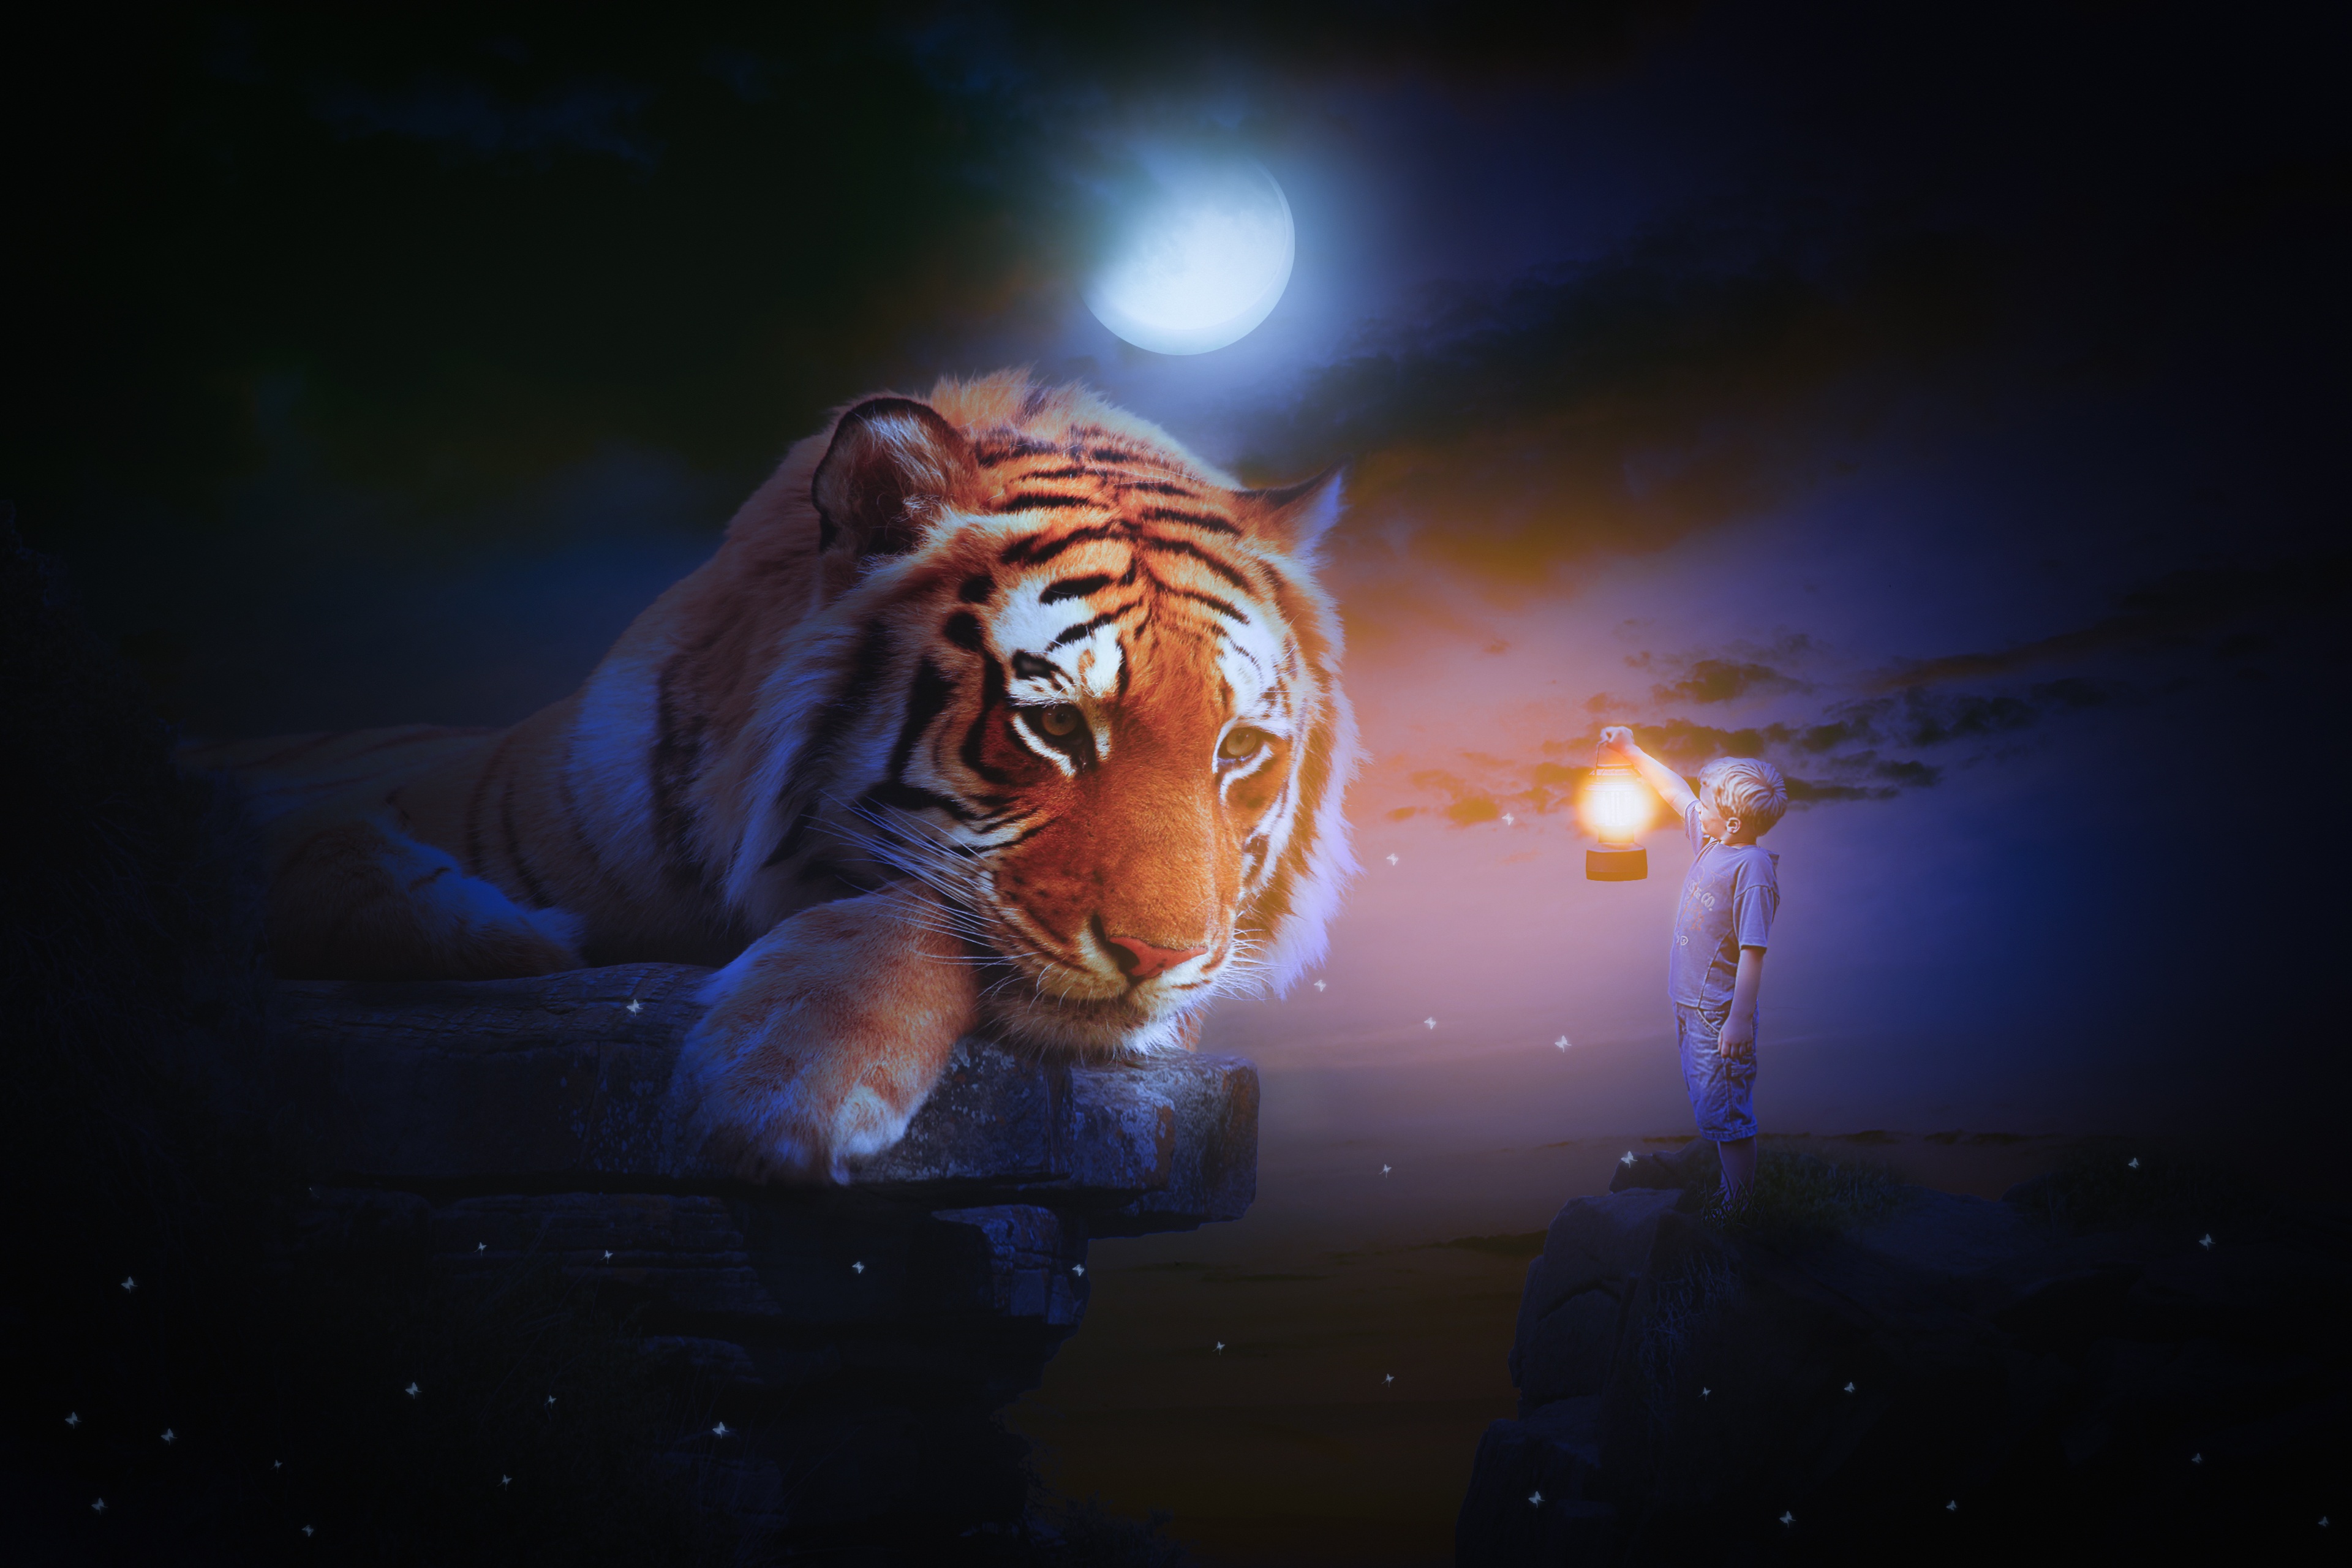 Wallpapers moonlight boy tiger on the desktop